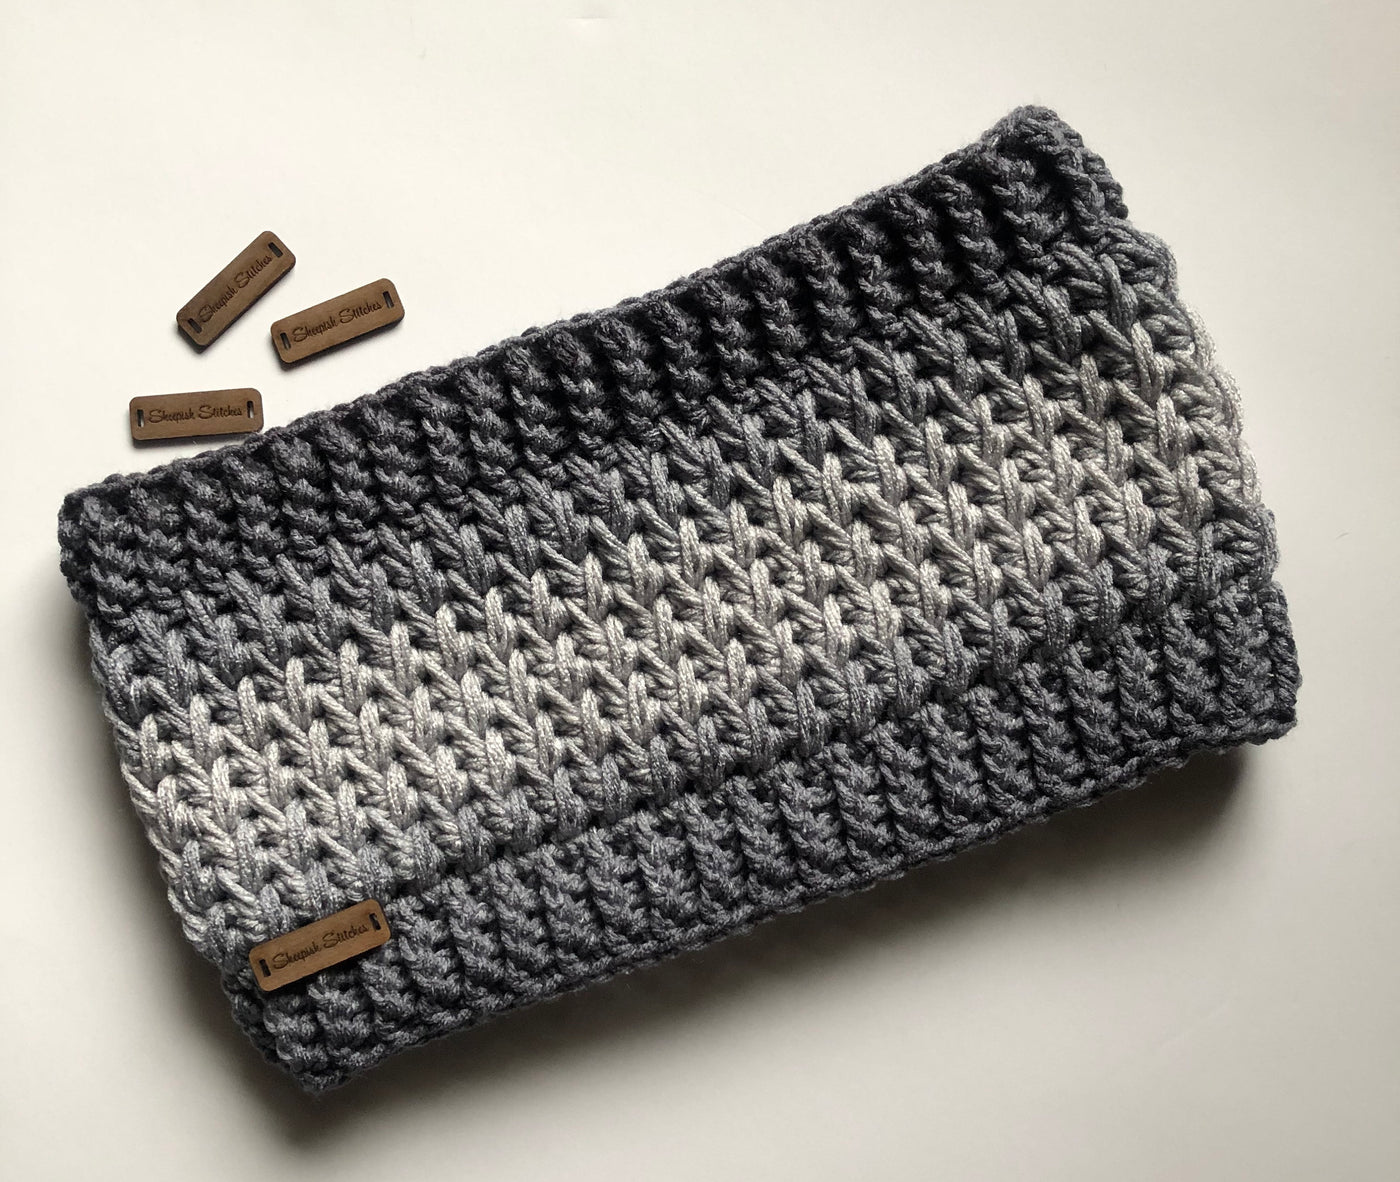 Kingsley Cowl Crochet Pattern by Sheepish Stitches